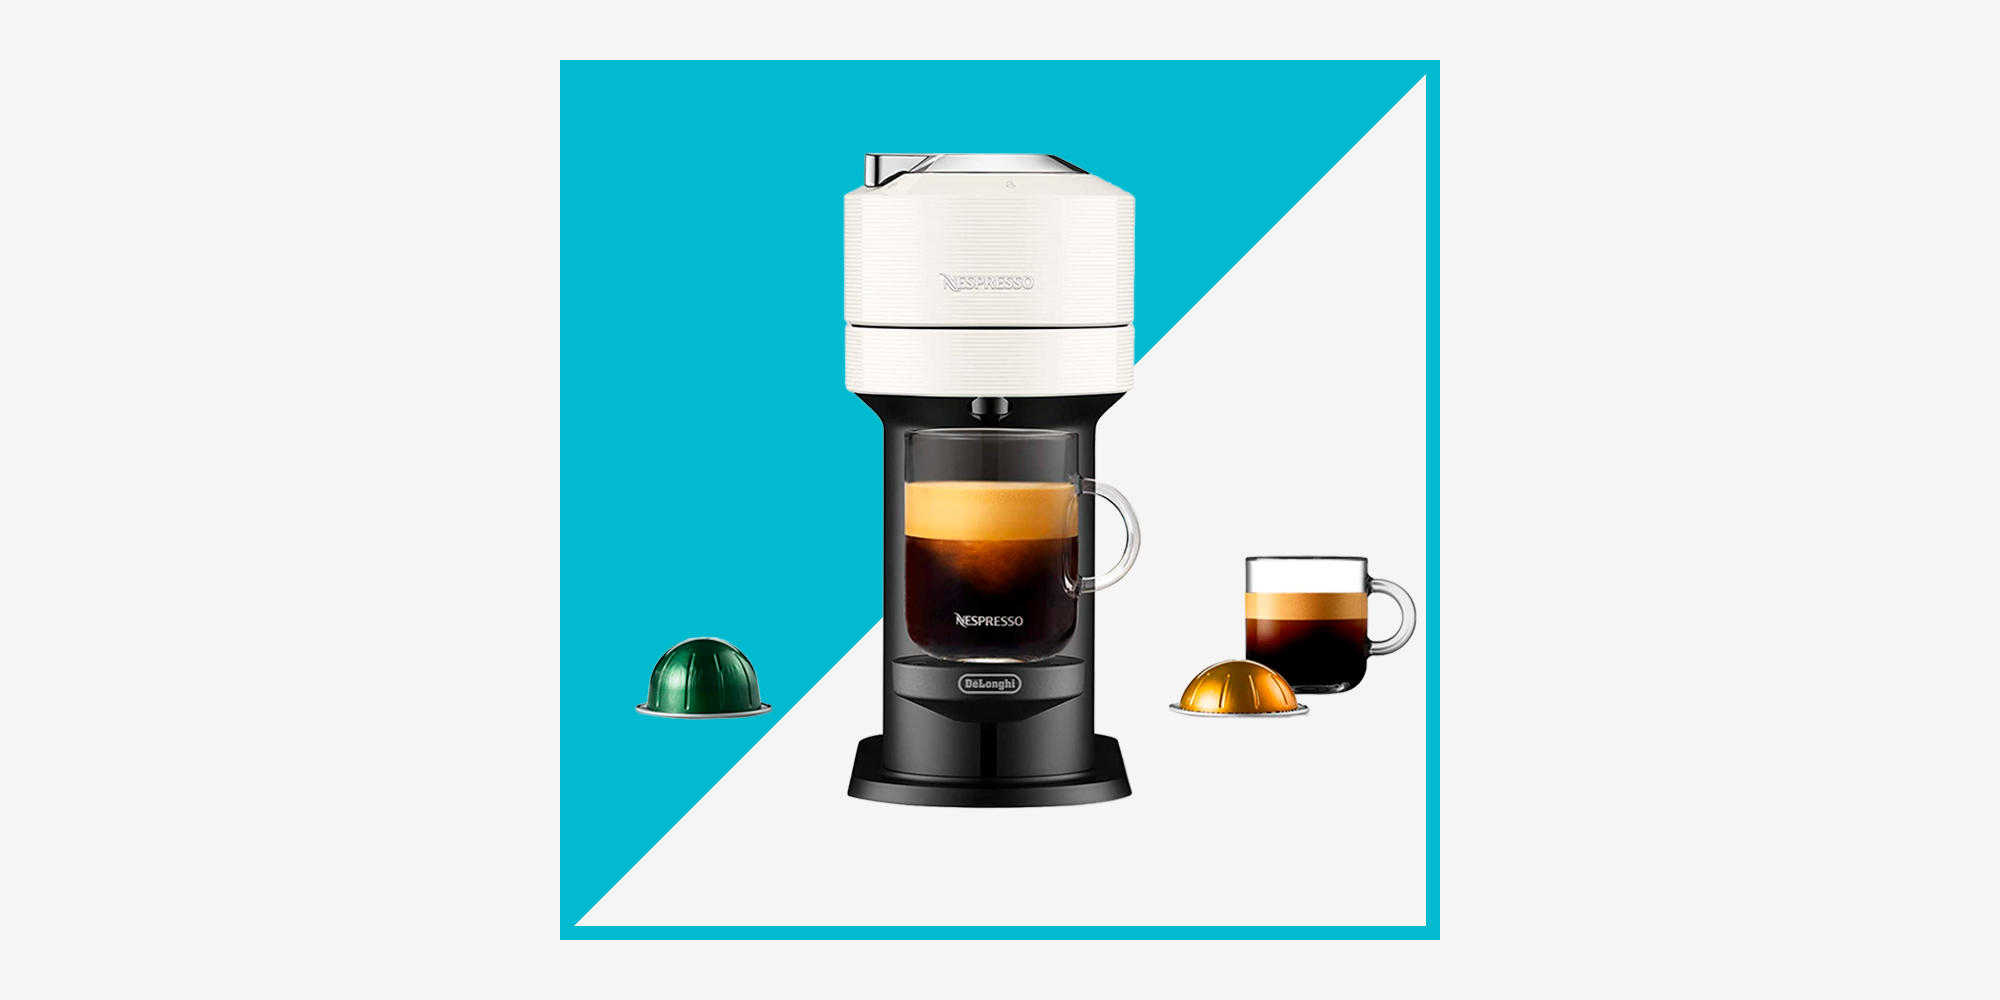 essence premier Getand Amazon's Selling a Nespresso Machine for Under $100